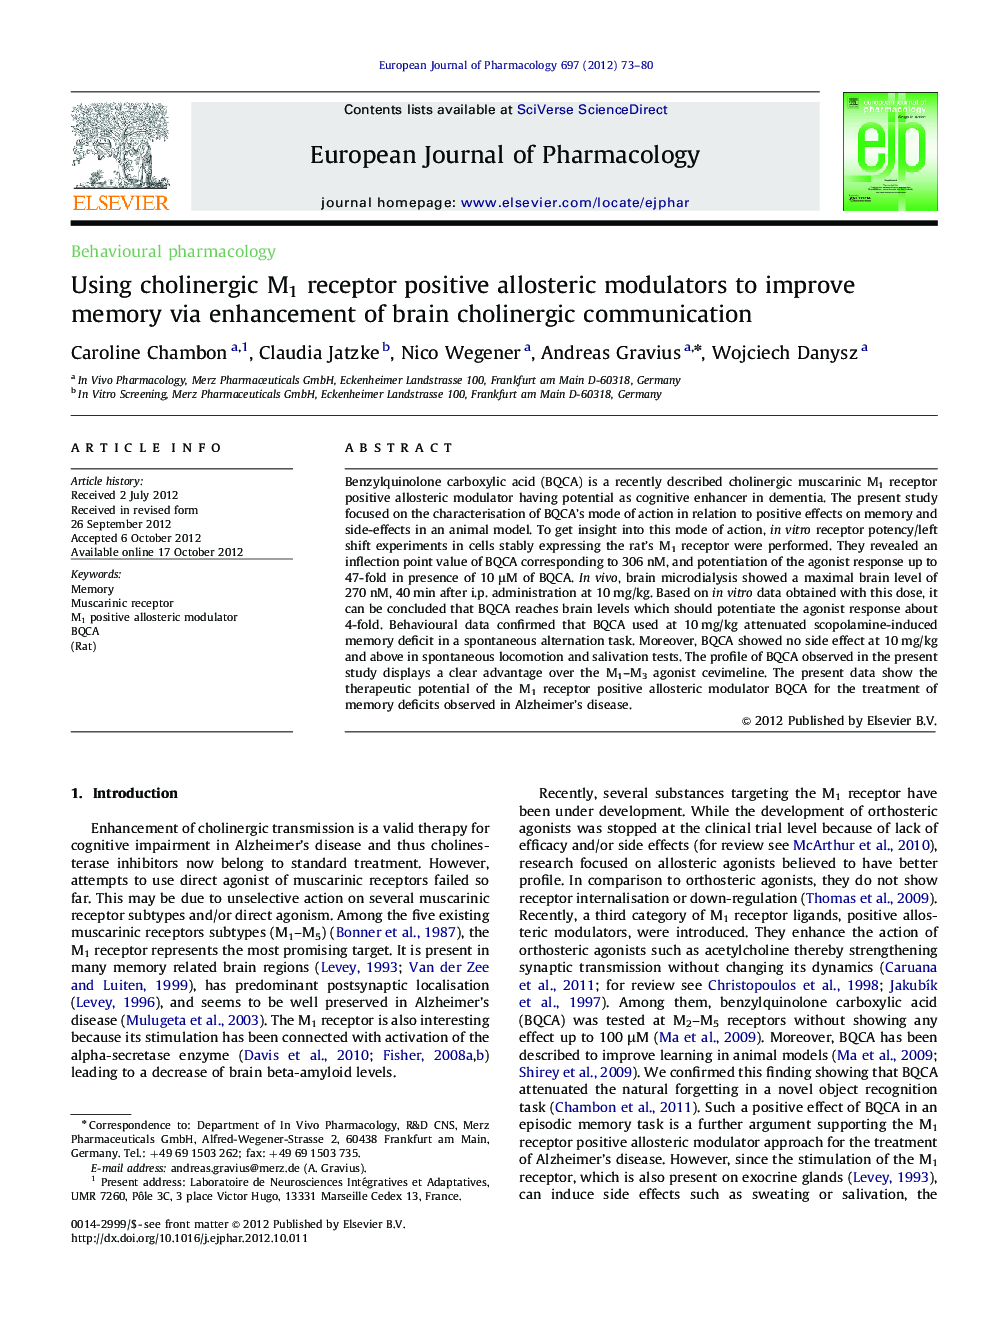 Behavioural pharmacologyUsing cholinergic M1 receptor positive allosteric modulators to improve memory via enhancement of brain cholinergic communication